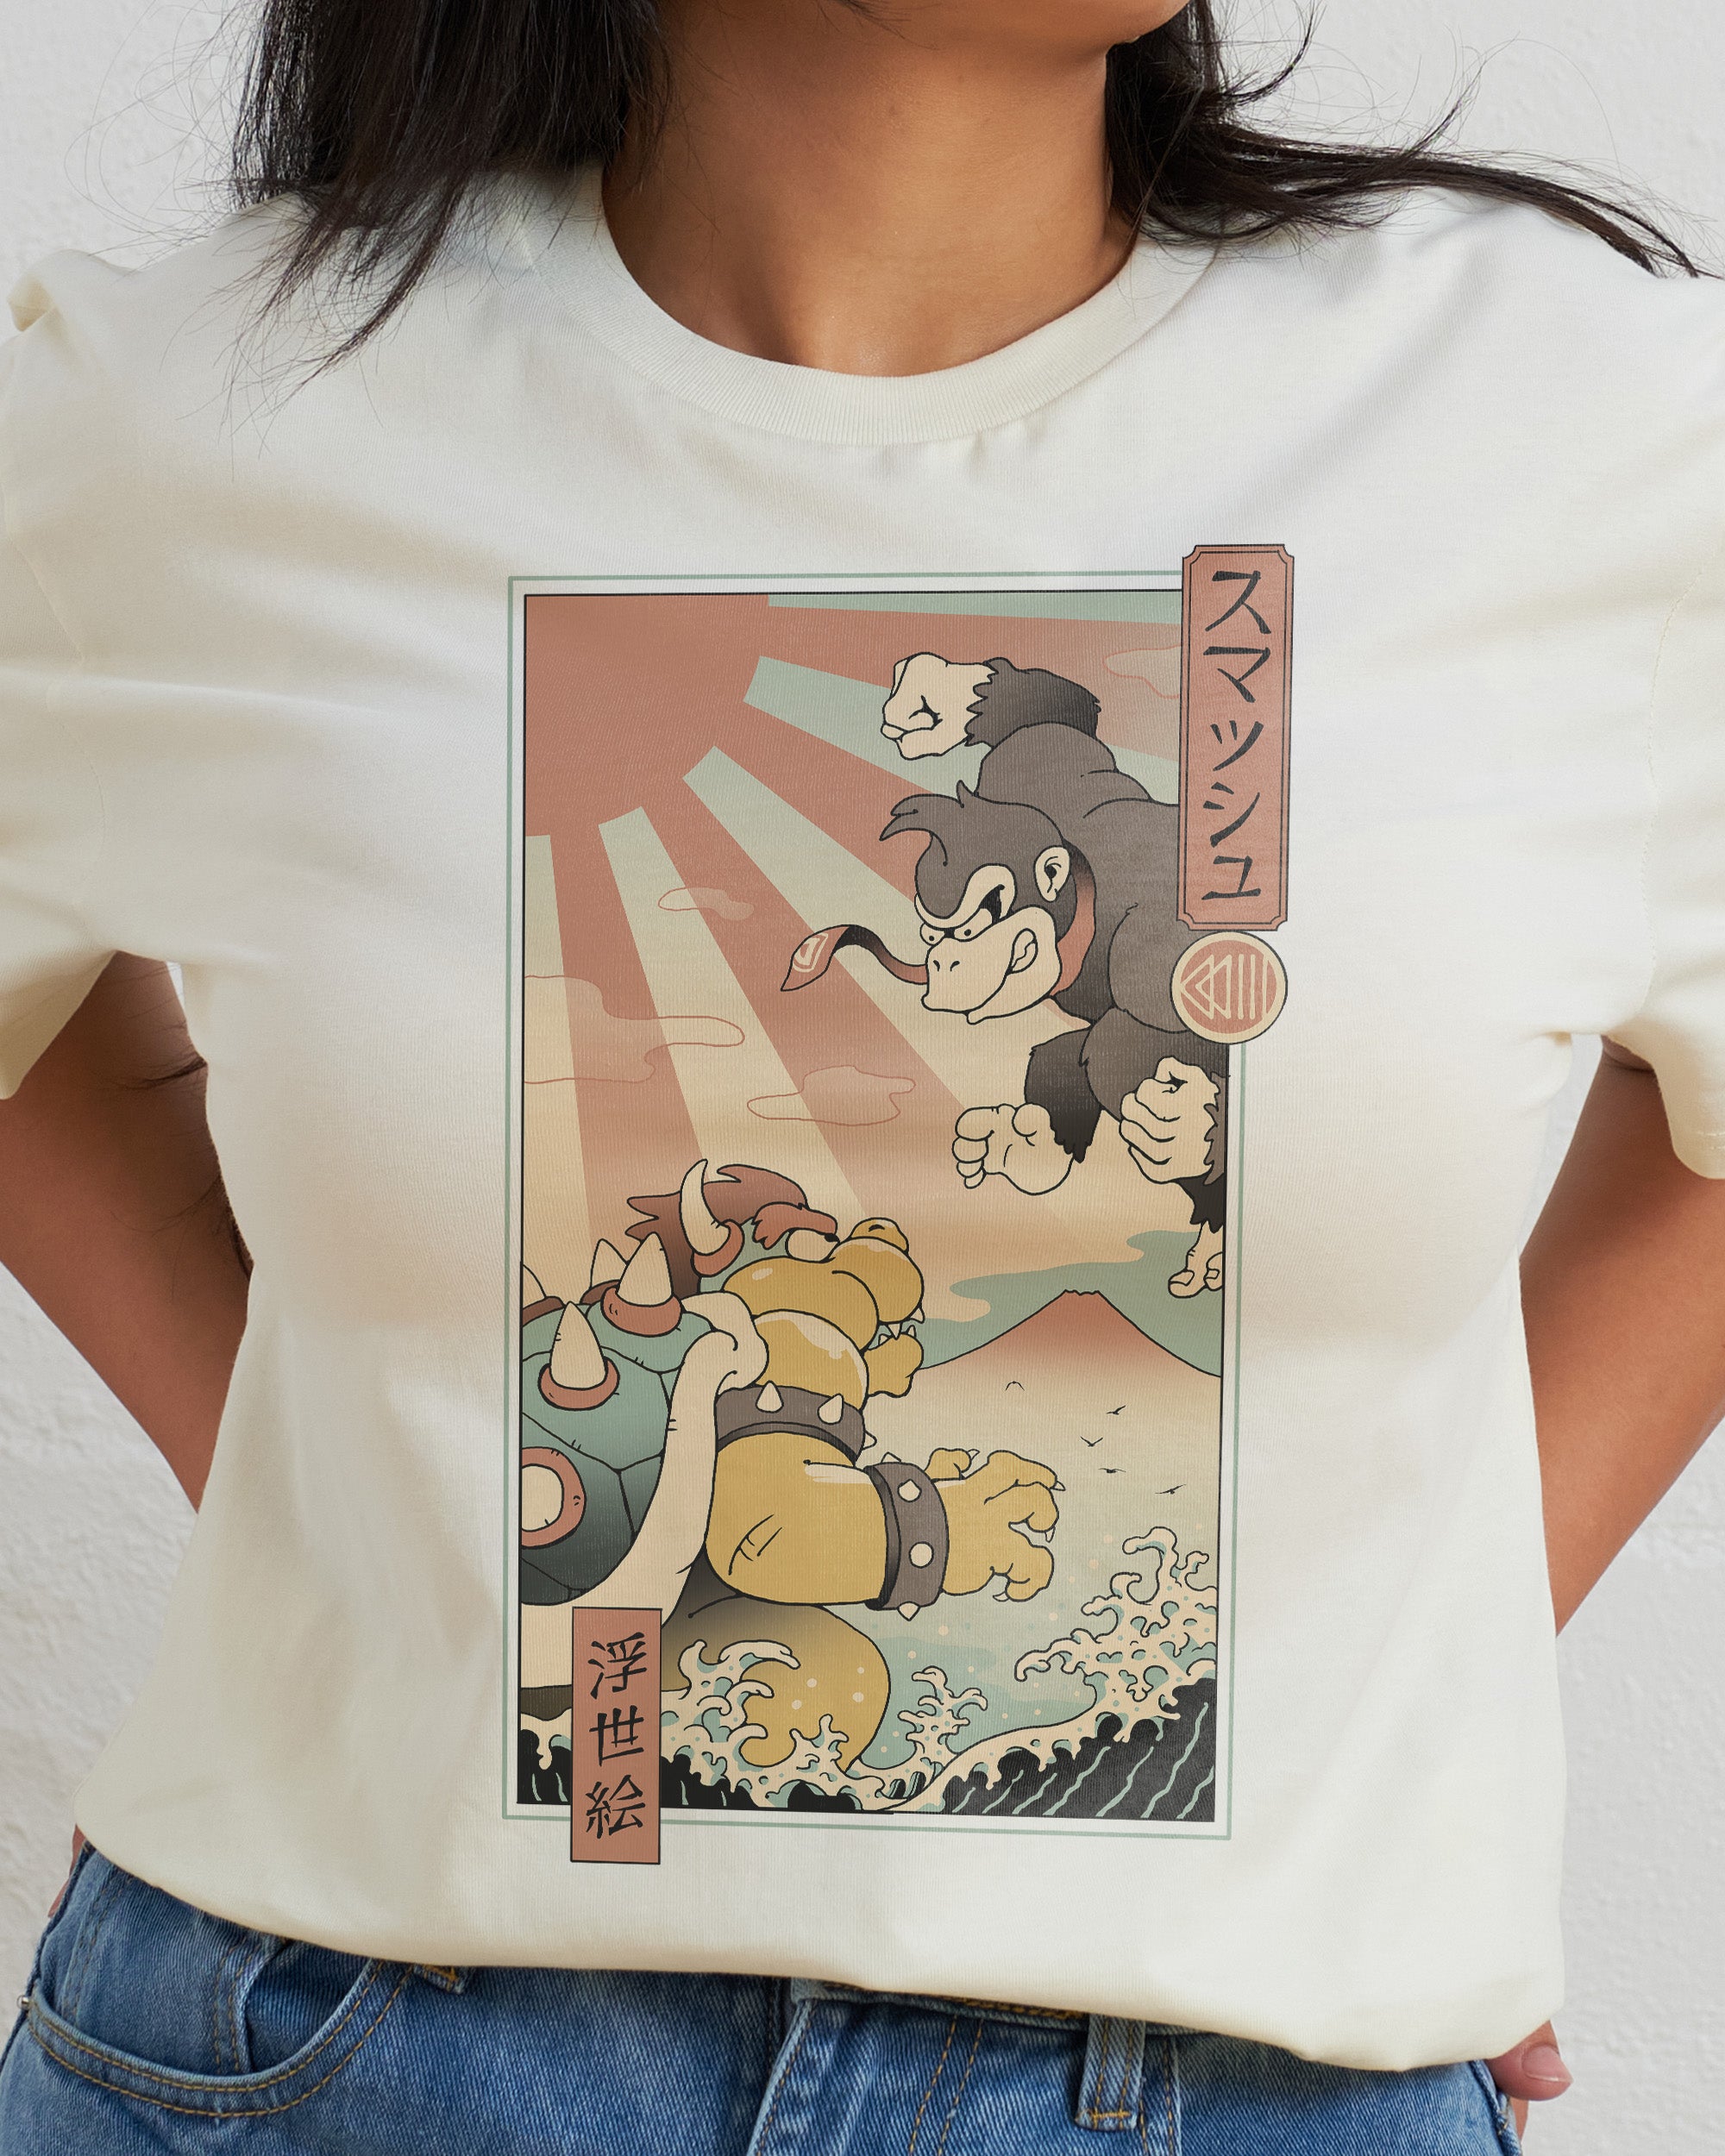 Kaiju Smash T-Shirt